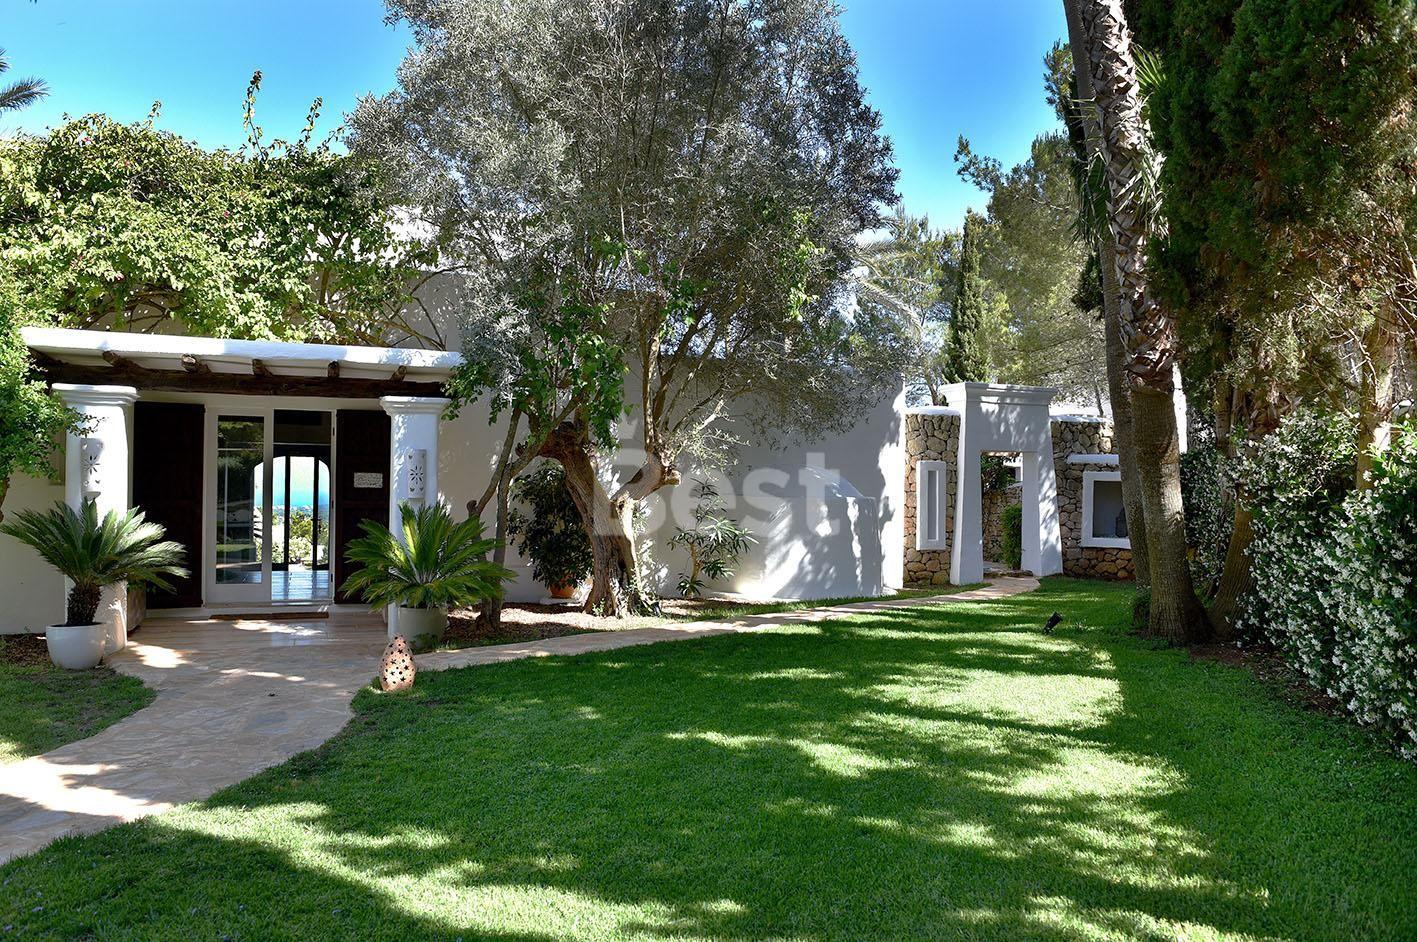 Villa lujosa en alquiler en Santa Eulalia - Ibiza. Luxurious rental villa in Ibiza (Santa Eularia)